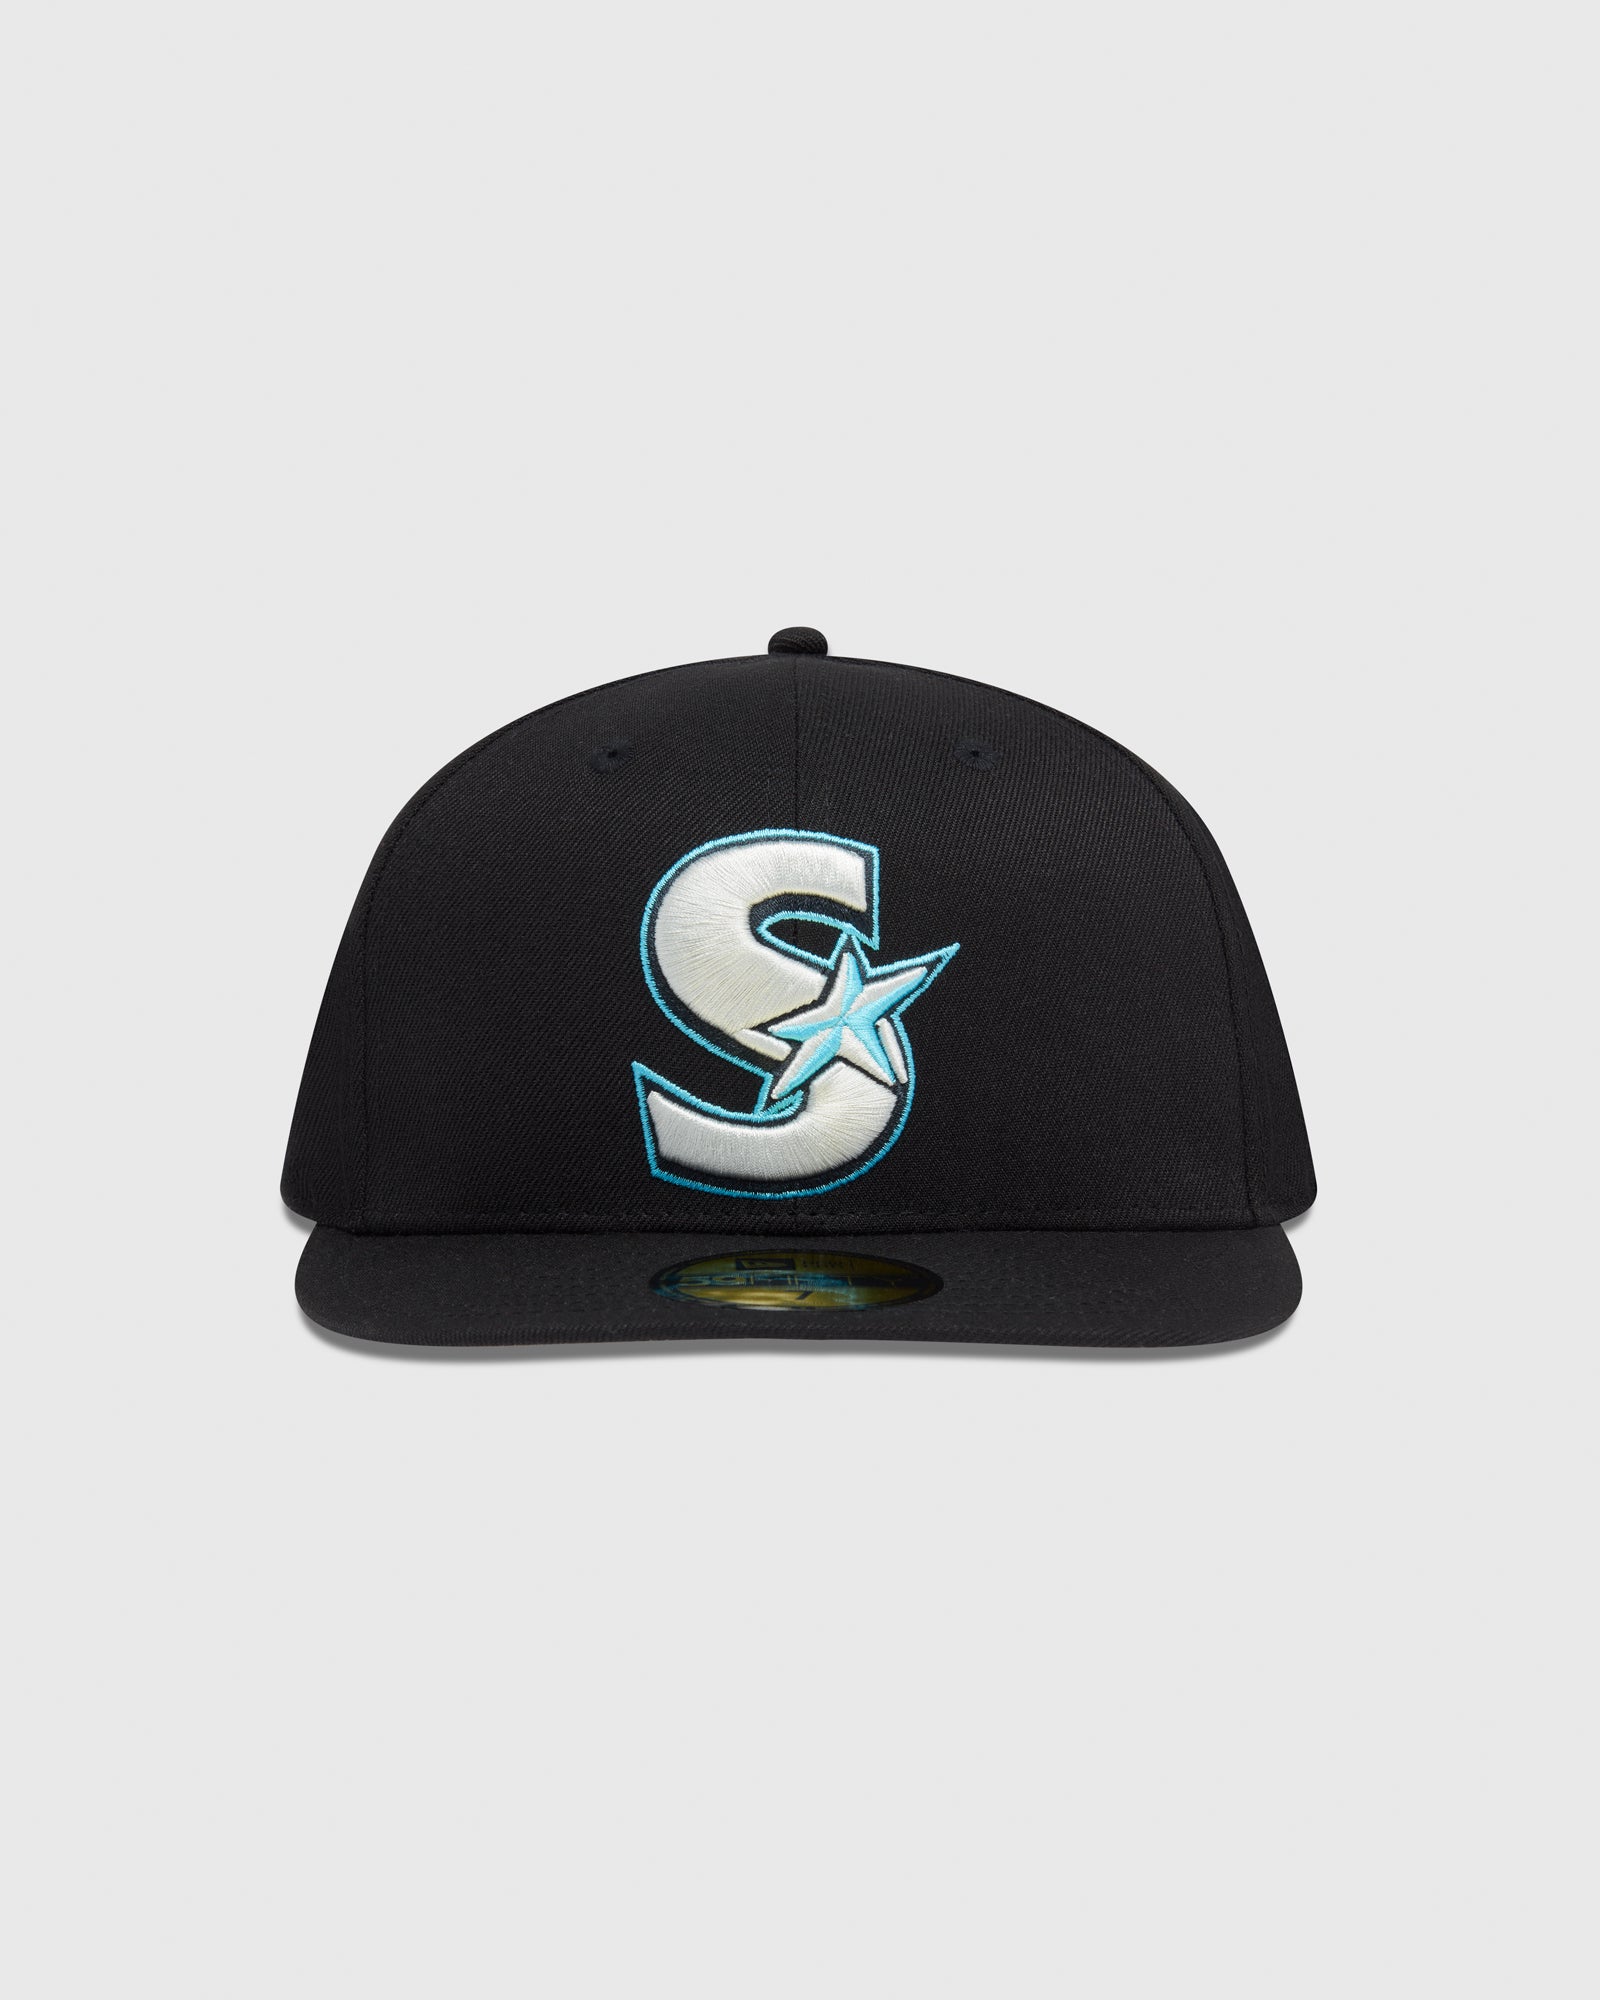 SSS New Era 59Fifty Cap - Black